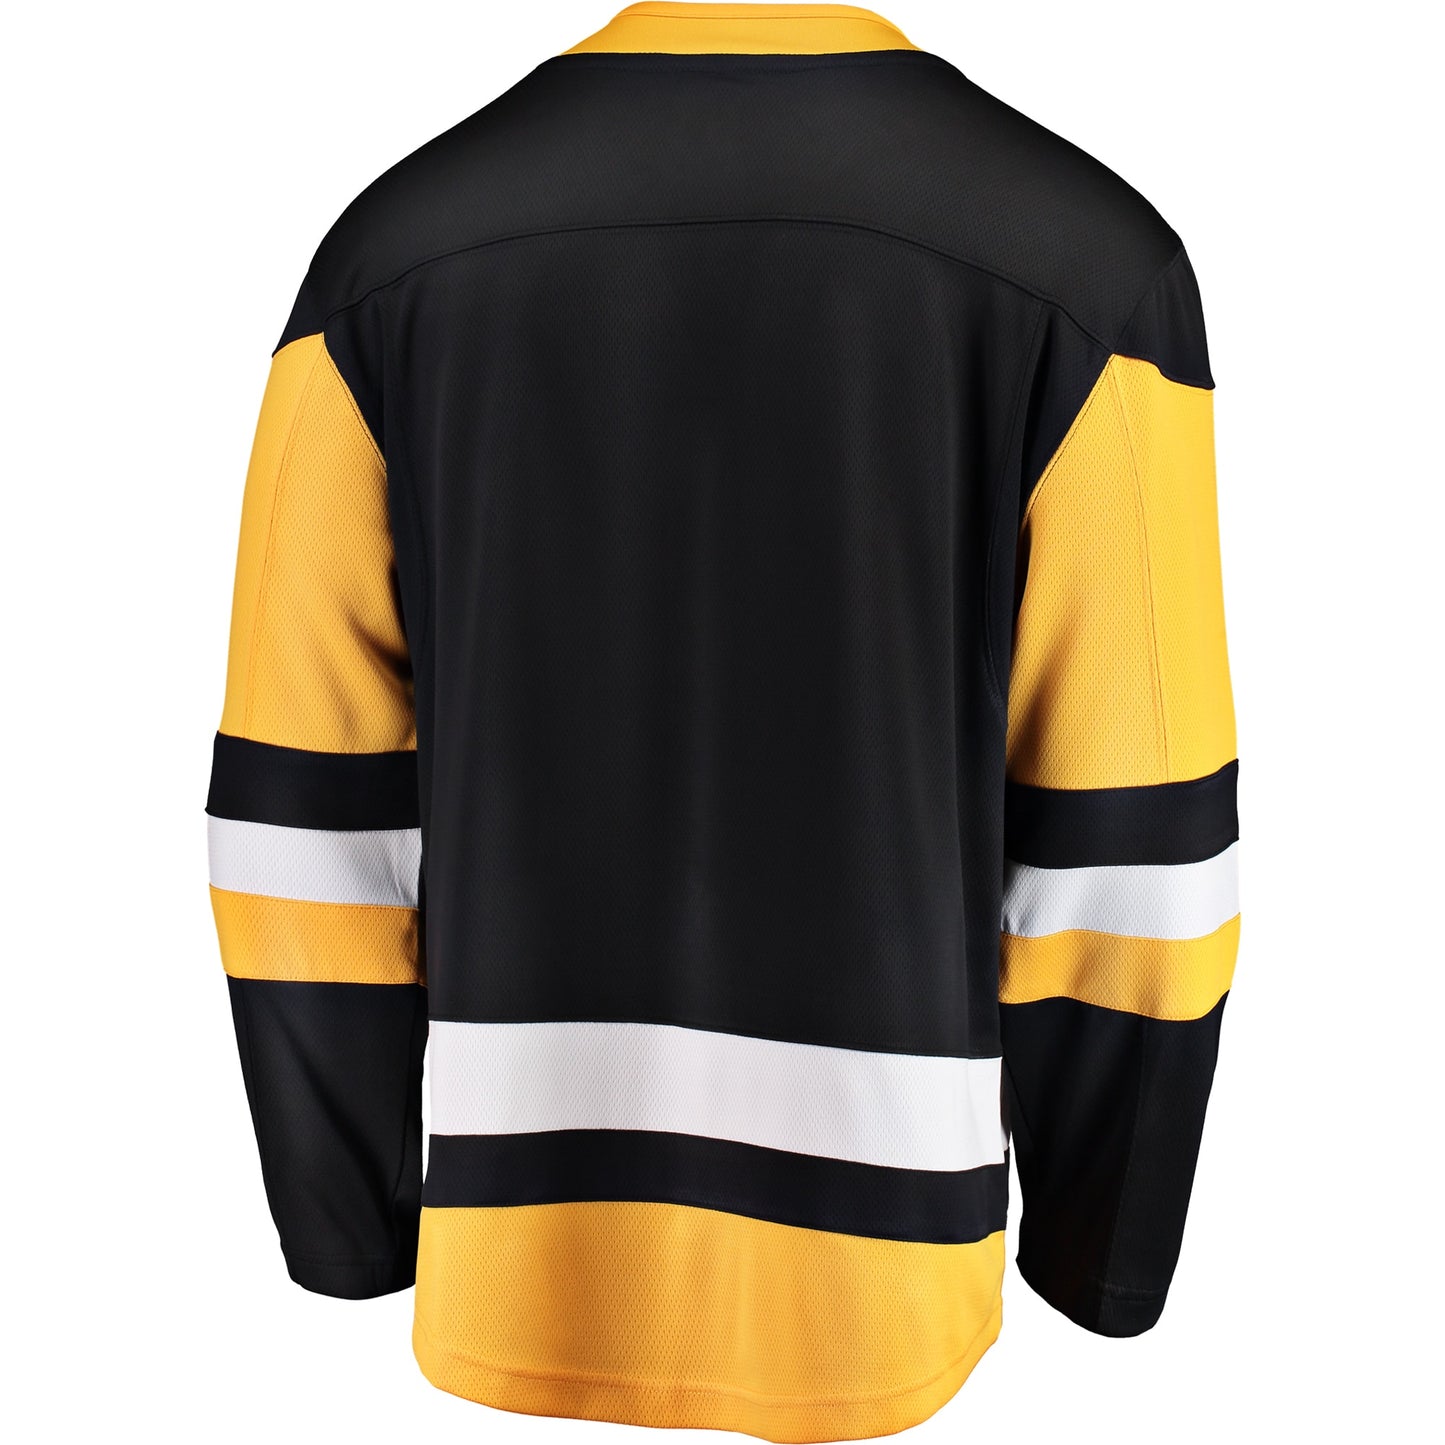 Pittsburgh Penguins Fanatics Branded Breakaway Home Jersey - Black